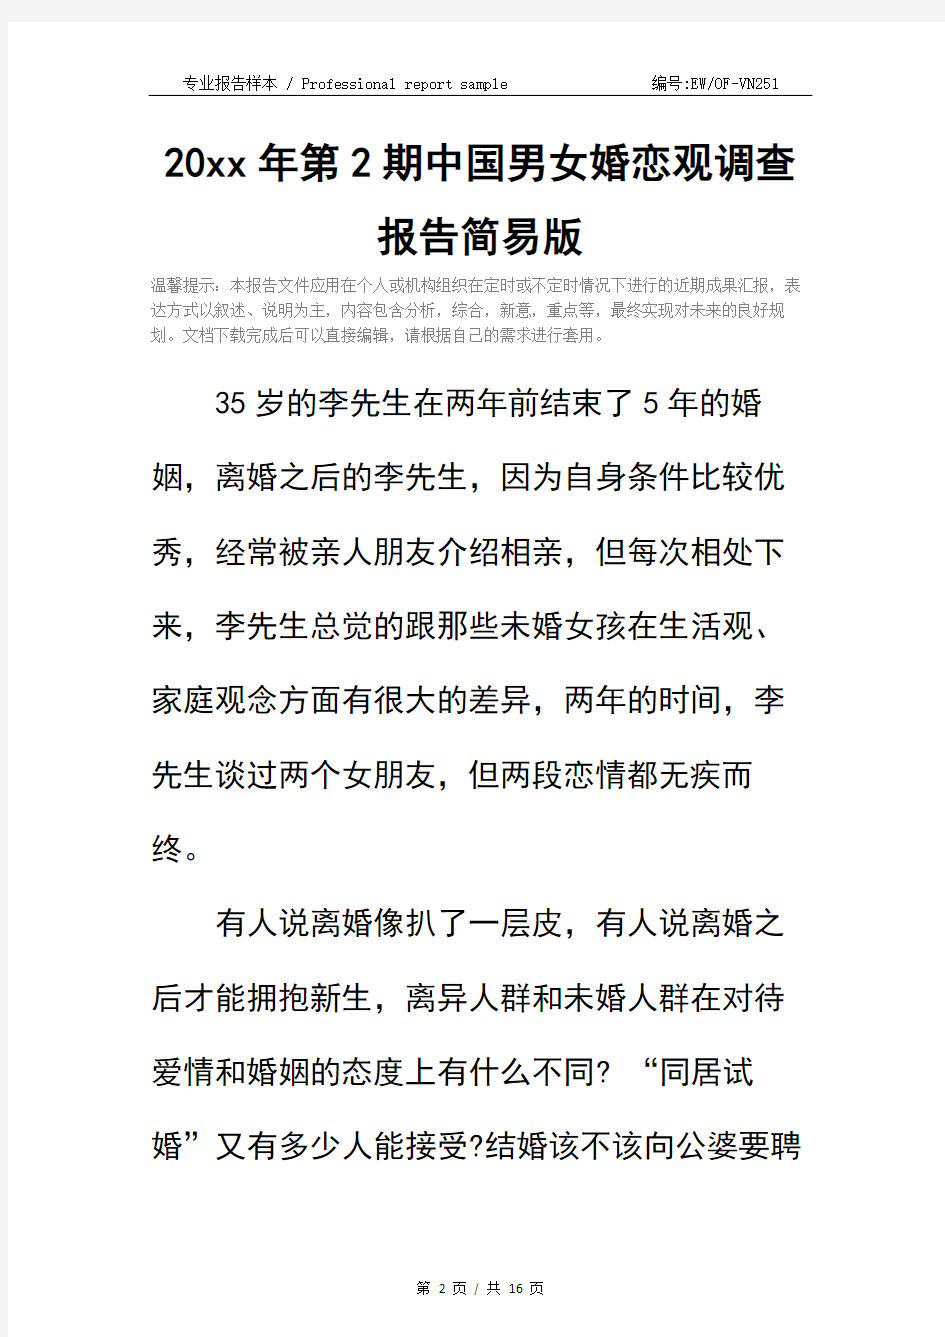 20xx年第2期中国男女婚恋观调查报告简易版